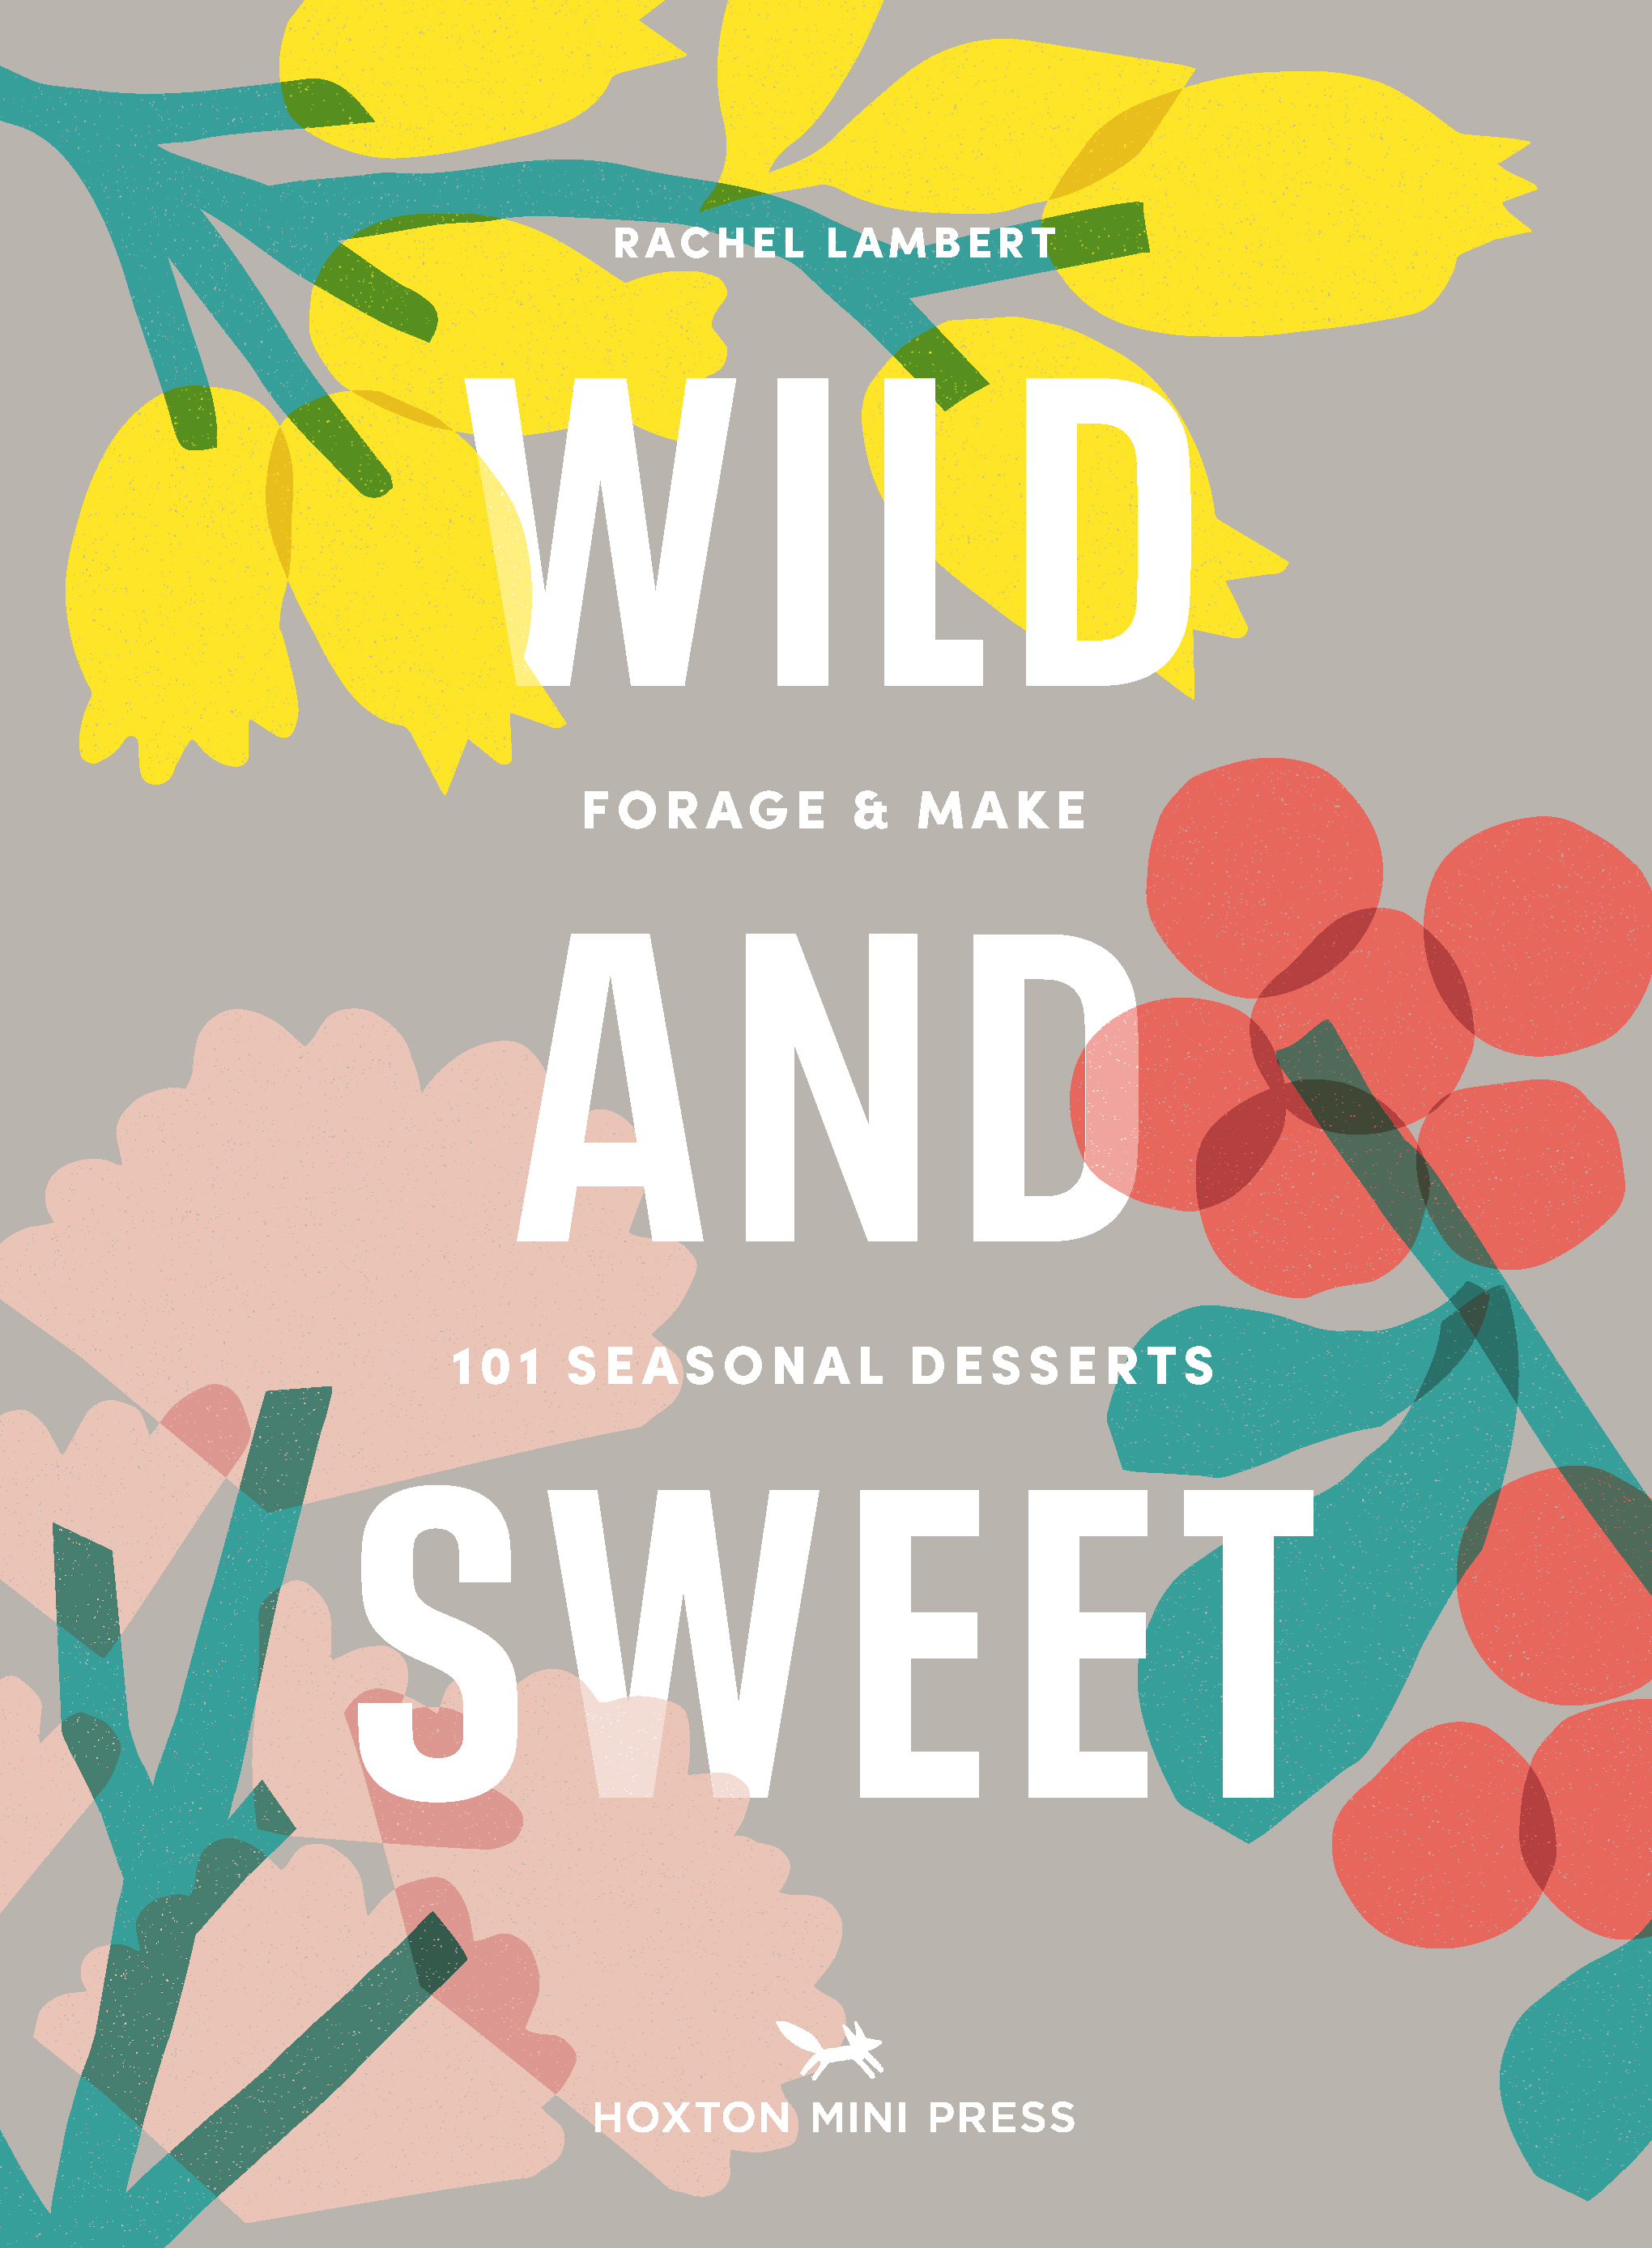 Wild & Sweet by Rachel Lambert (Hoxton Mini Press)